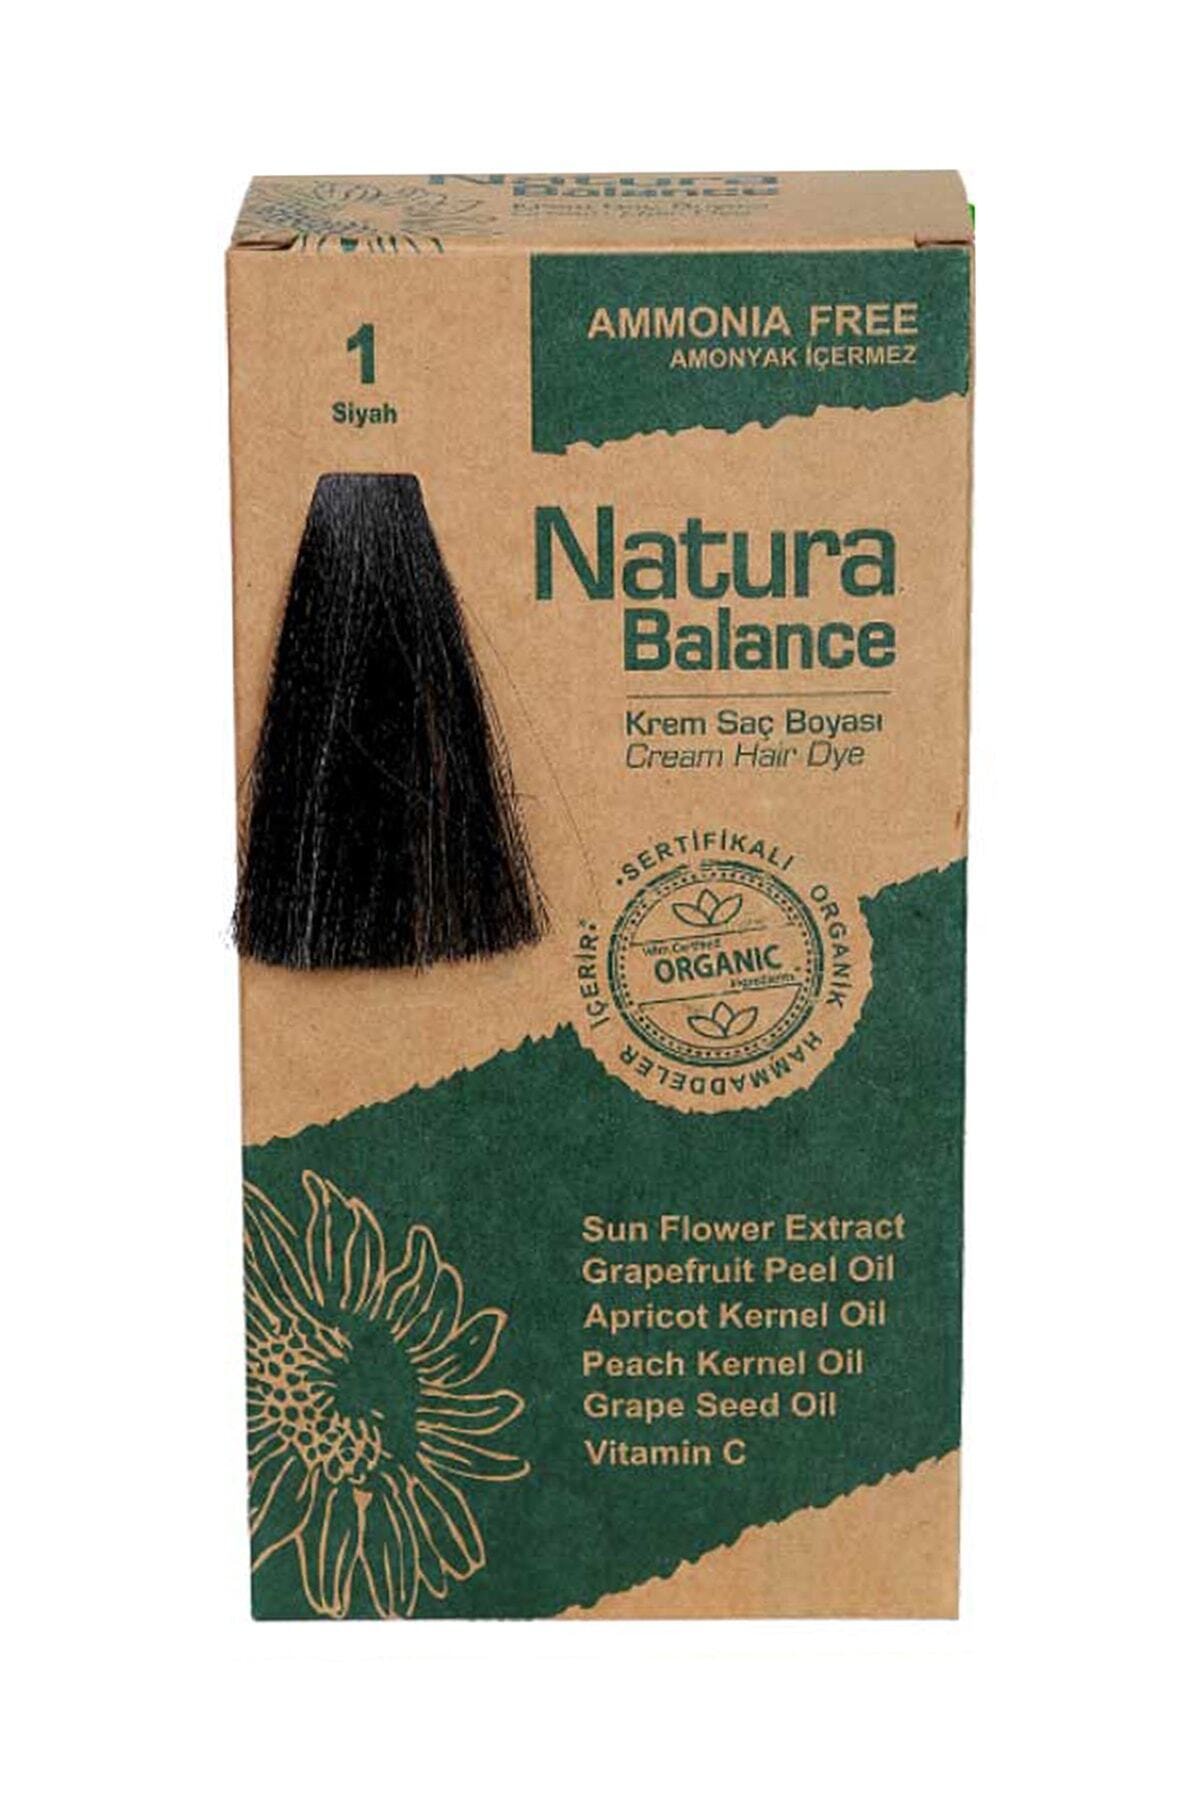 NATURABALANCE Organik Krem Saç Boyası 1 Siyah 60 ml